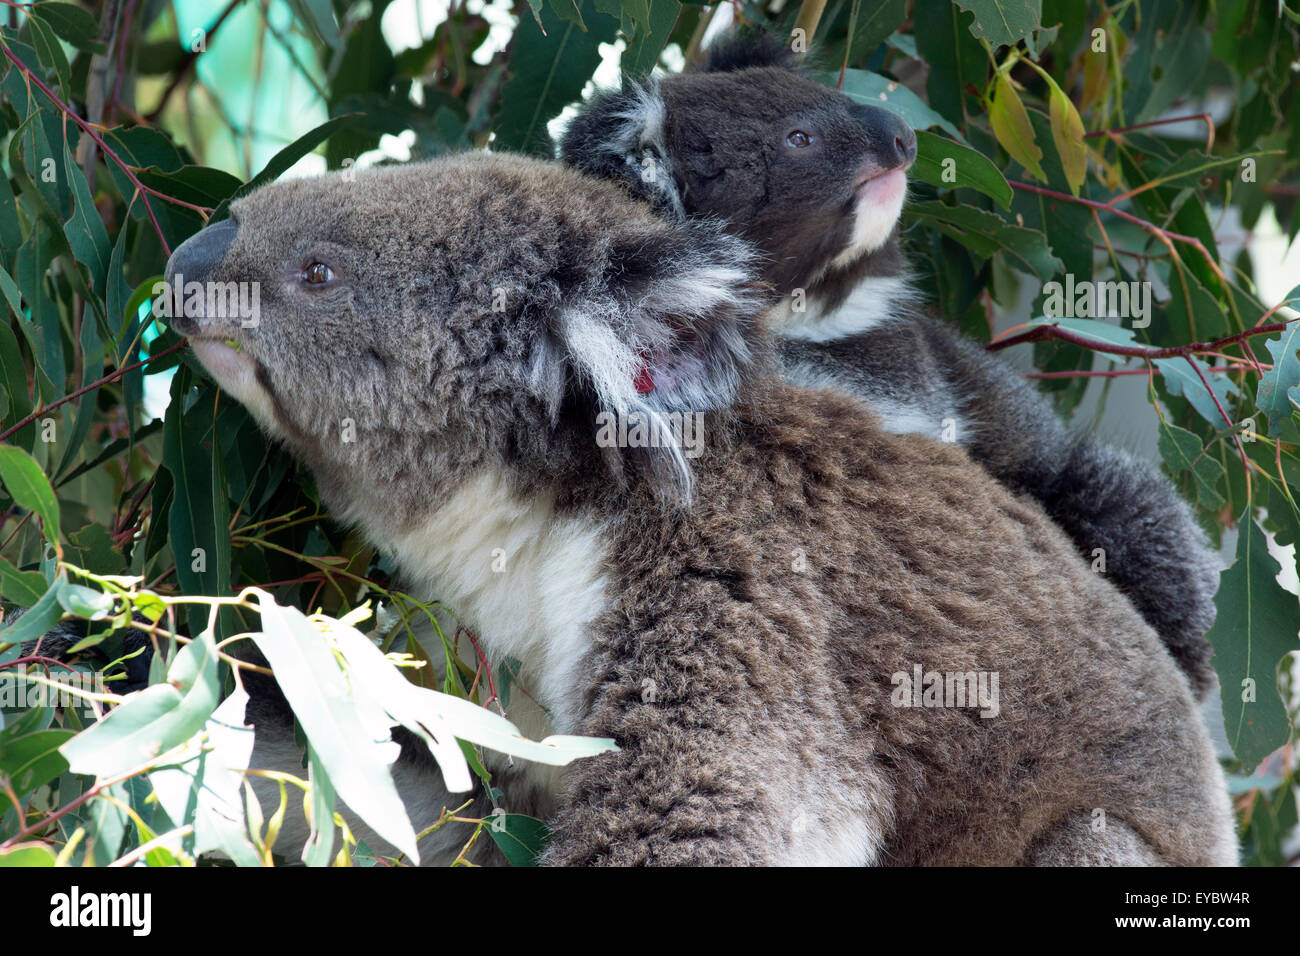 (Tidbinbilla Nature Reserve, Australia---24 December 2013)     A female koala with a baby joey on her back in Tidbinbilla Nature Stock Photo